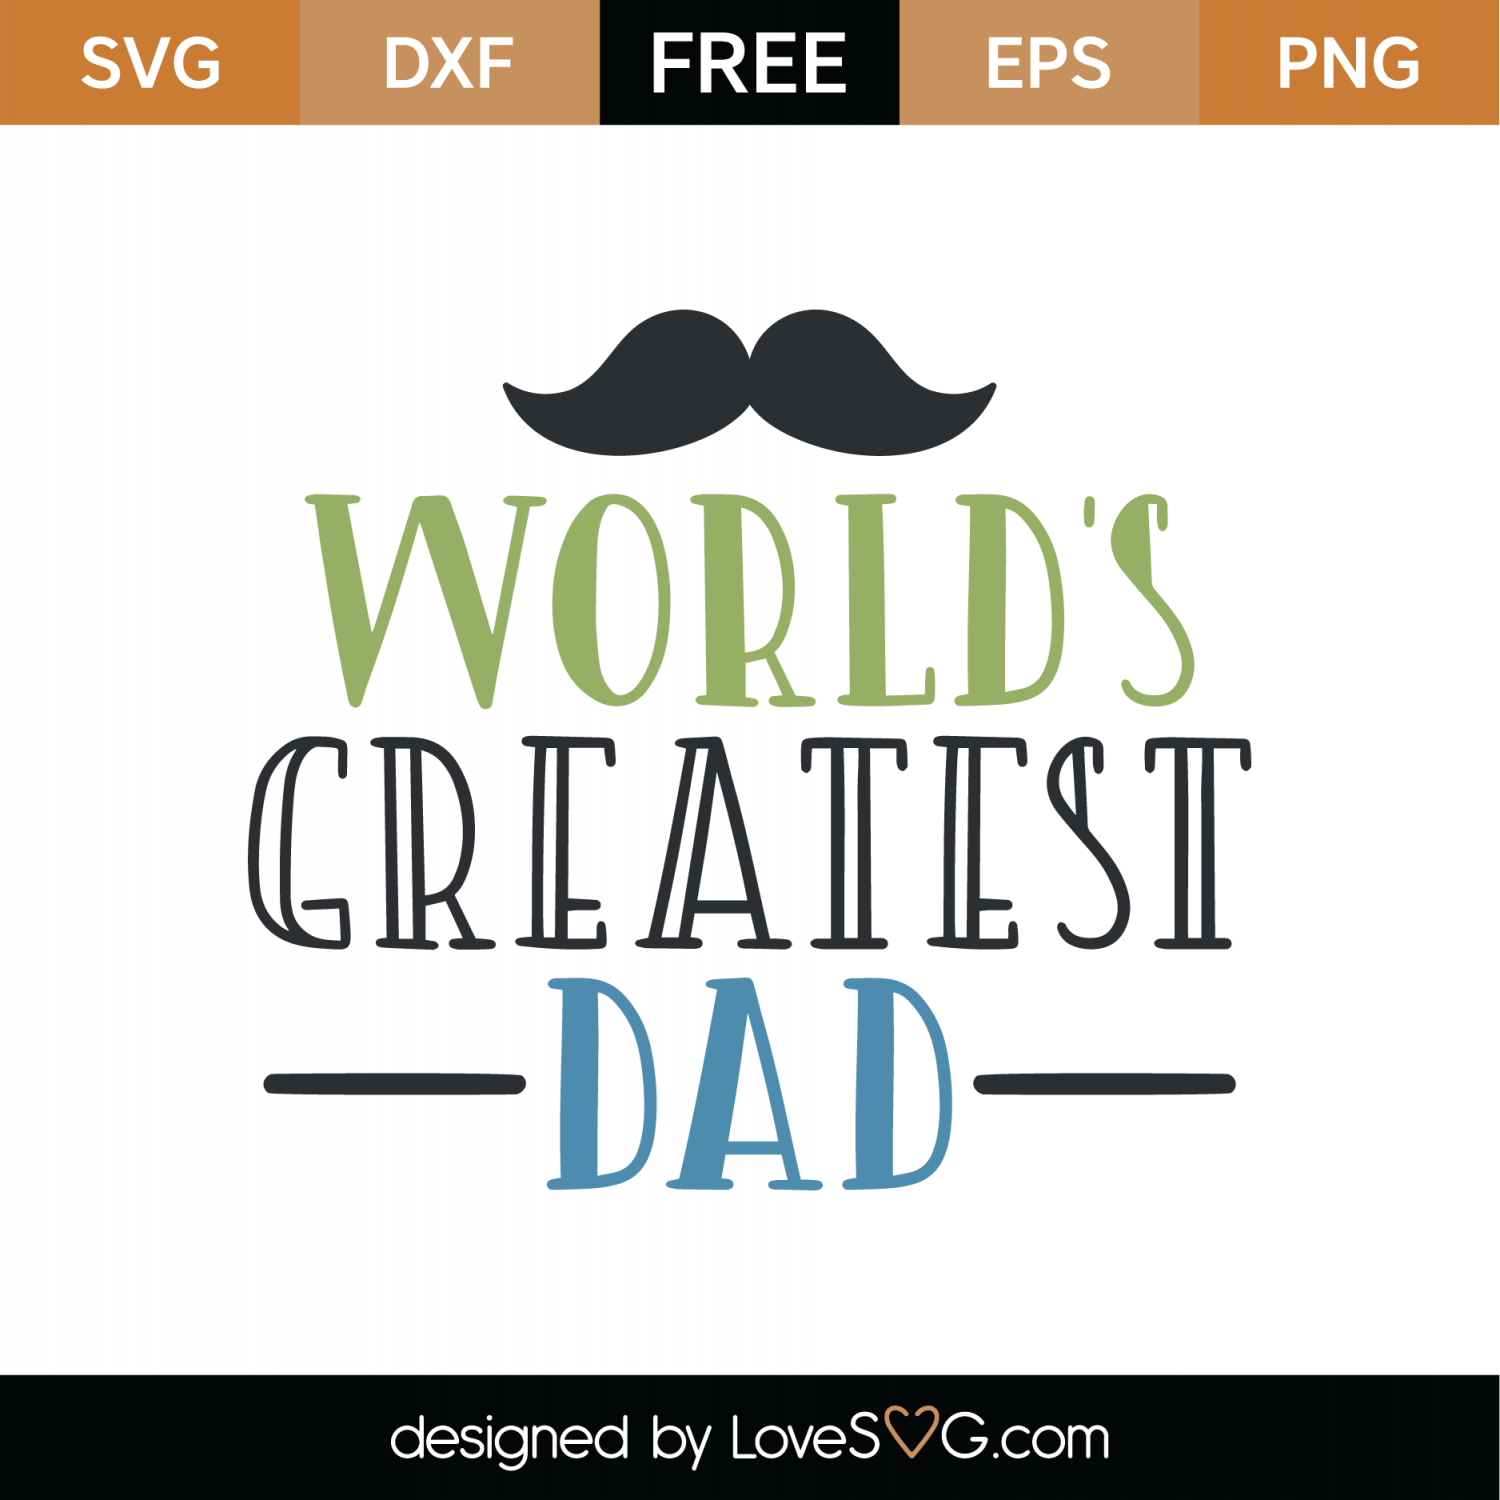 Download Free World's Greatest Dad SVG Cut File | Lovesvg.com